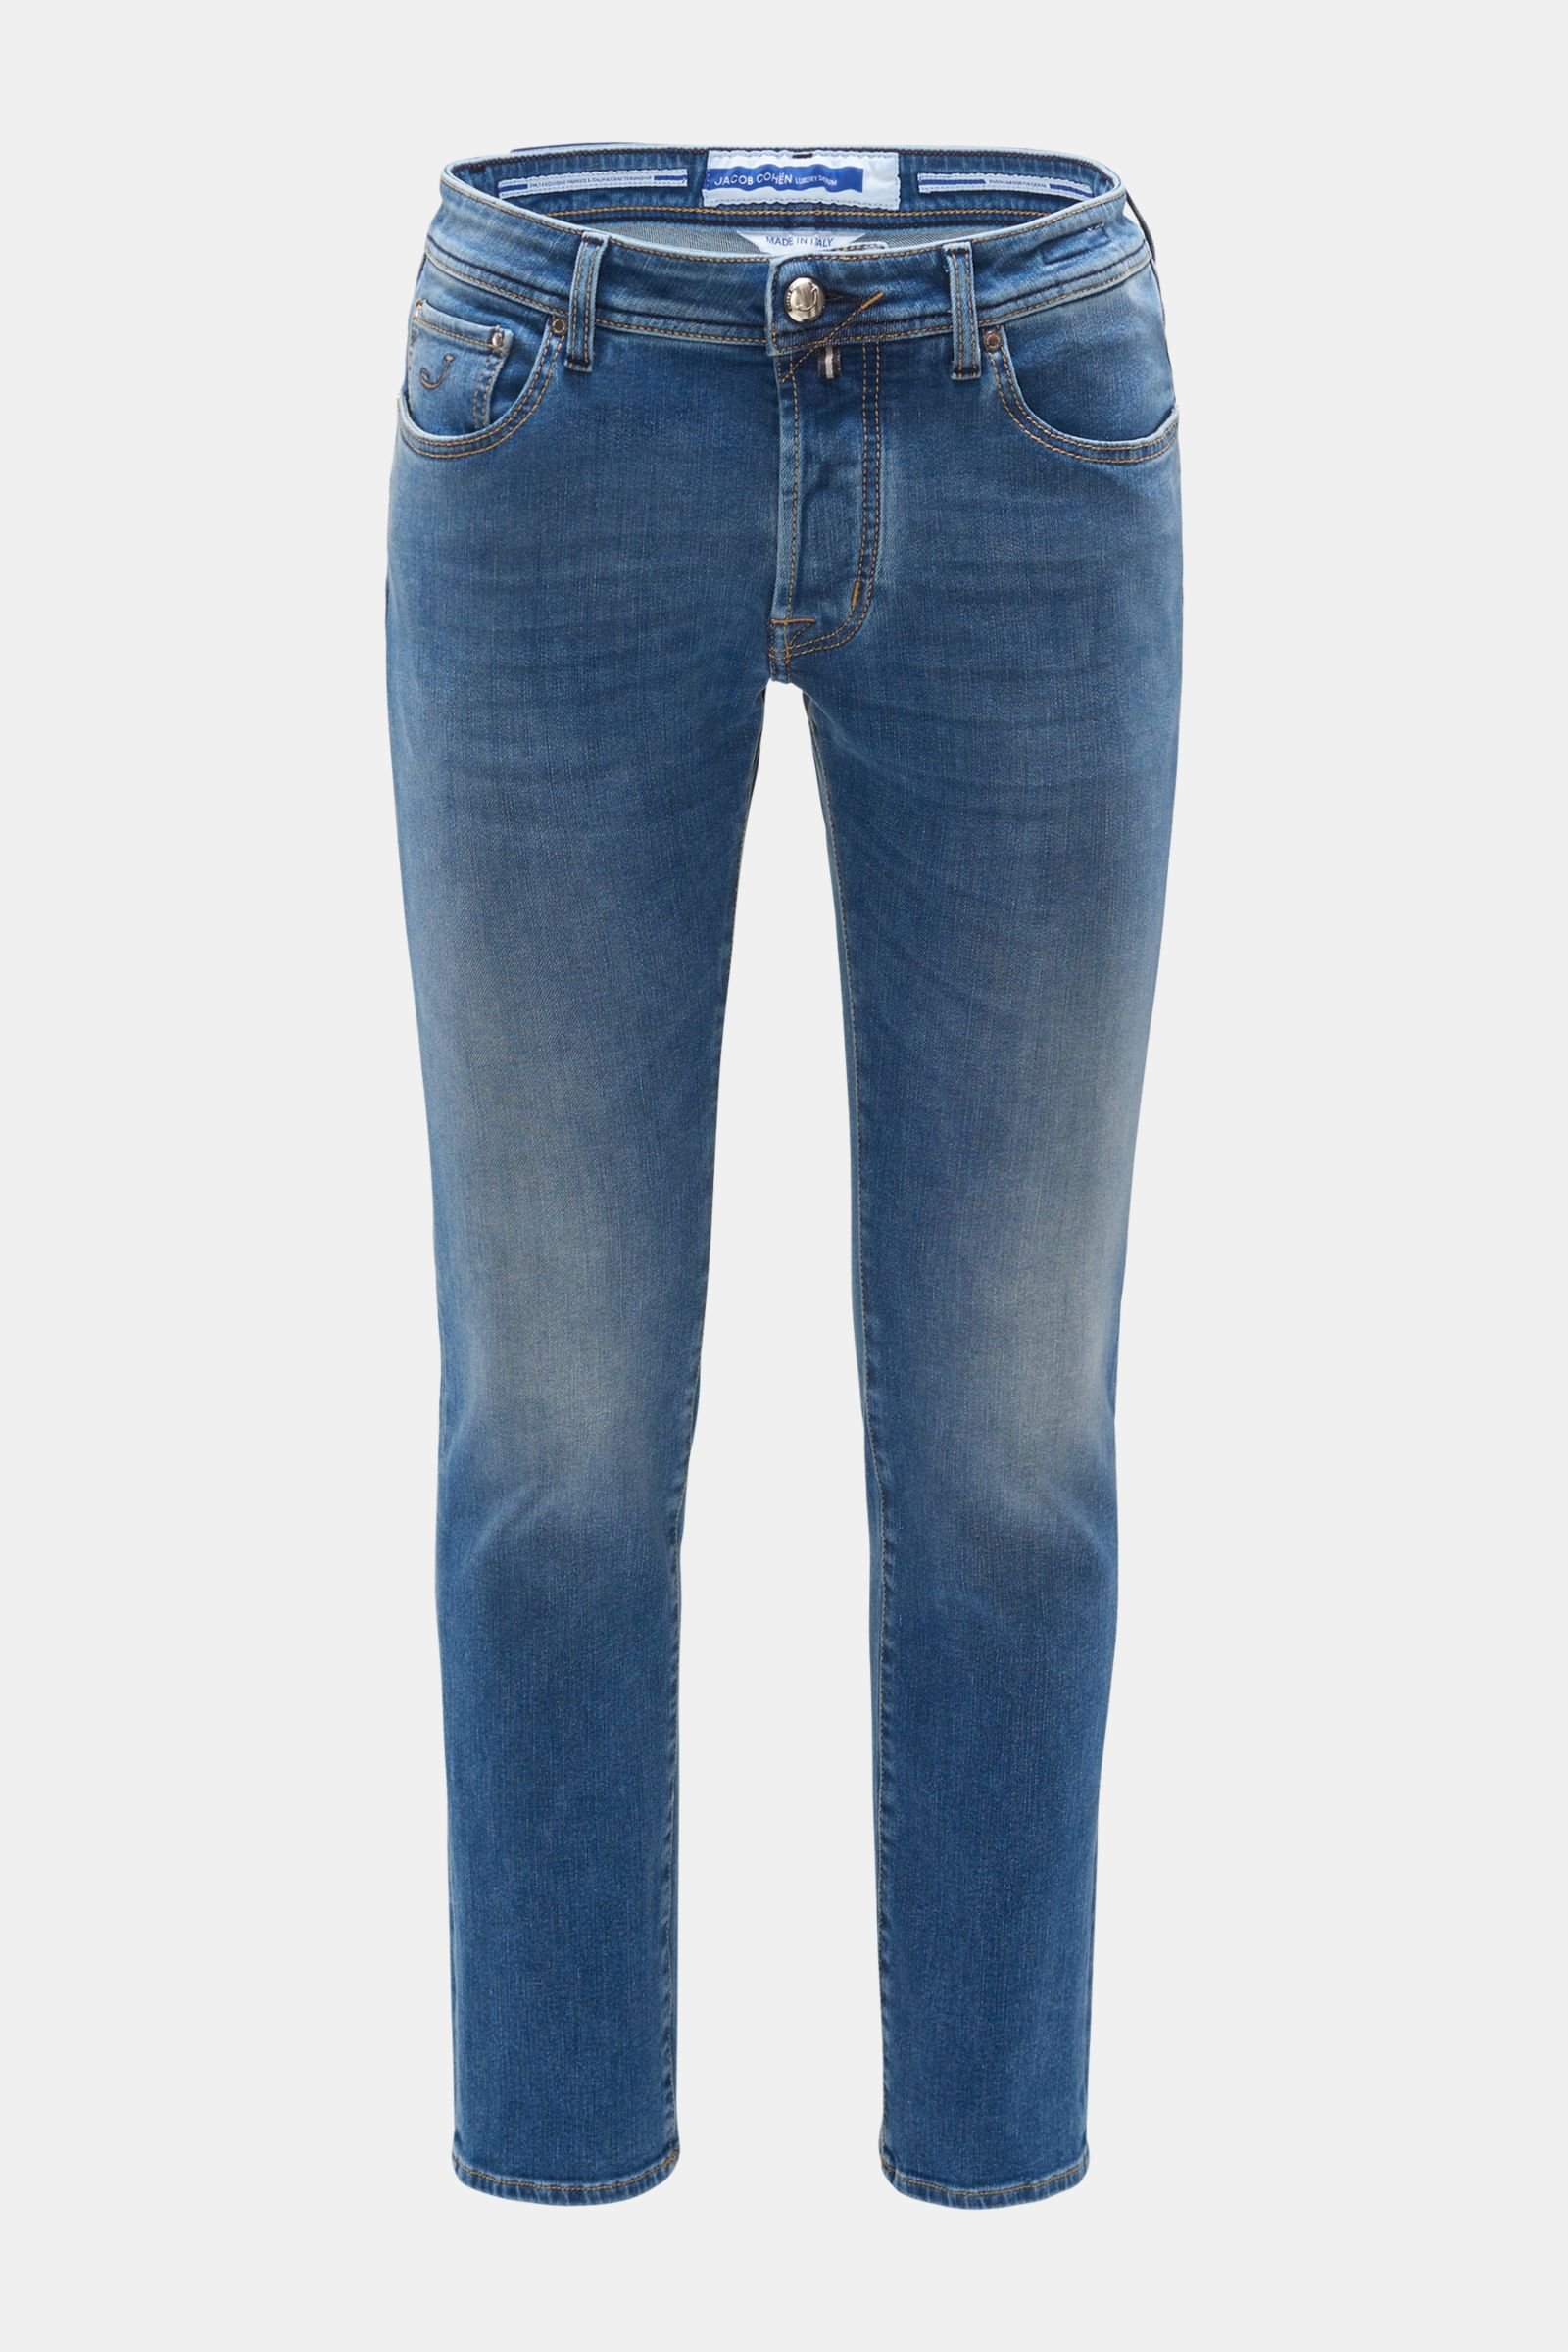 'Bard' jeans grey-blue (previously J688)